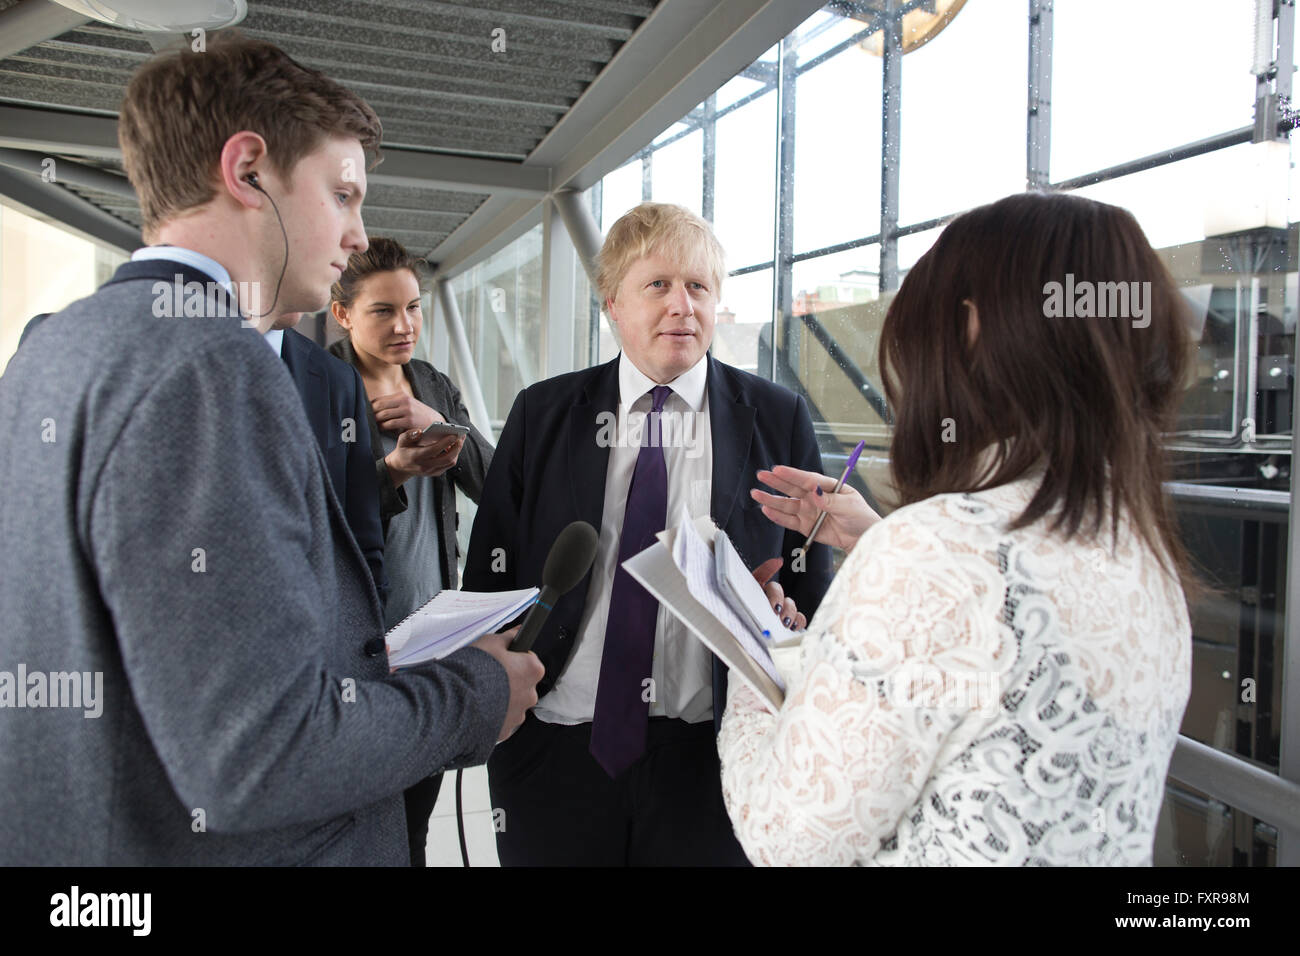 Boris Johnson hält Interviews in den Medien am Centre for Life in Newcastle. Brexit 'Abstimmung verlassen' Rallye von Boris Johnson MP Wahlkampf um den Euro zu verlassen, am 23. Juni statt Referendum, Newcastle, England UK Stockfoto